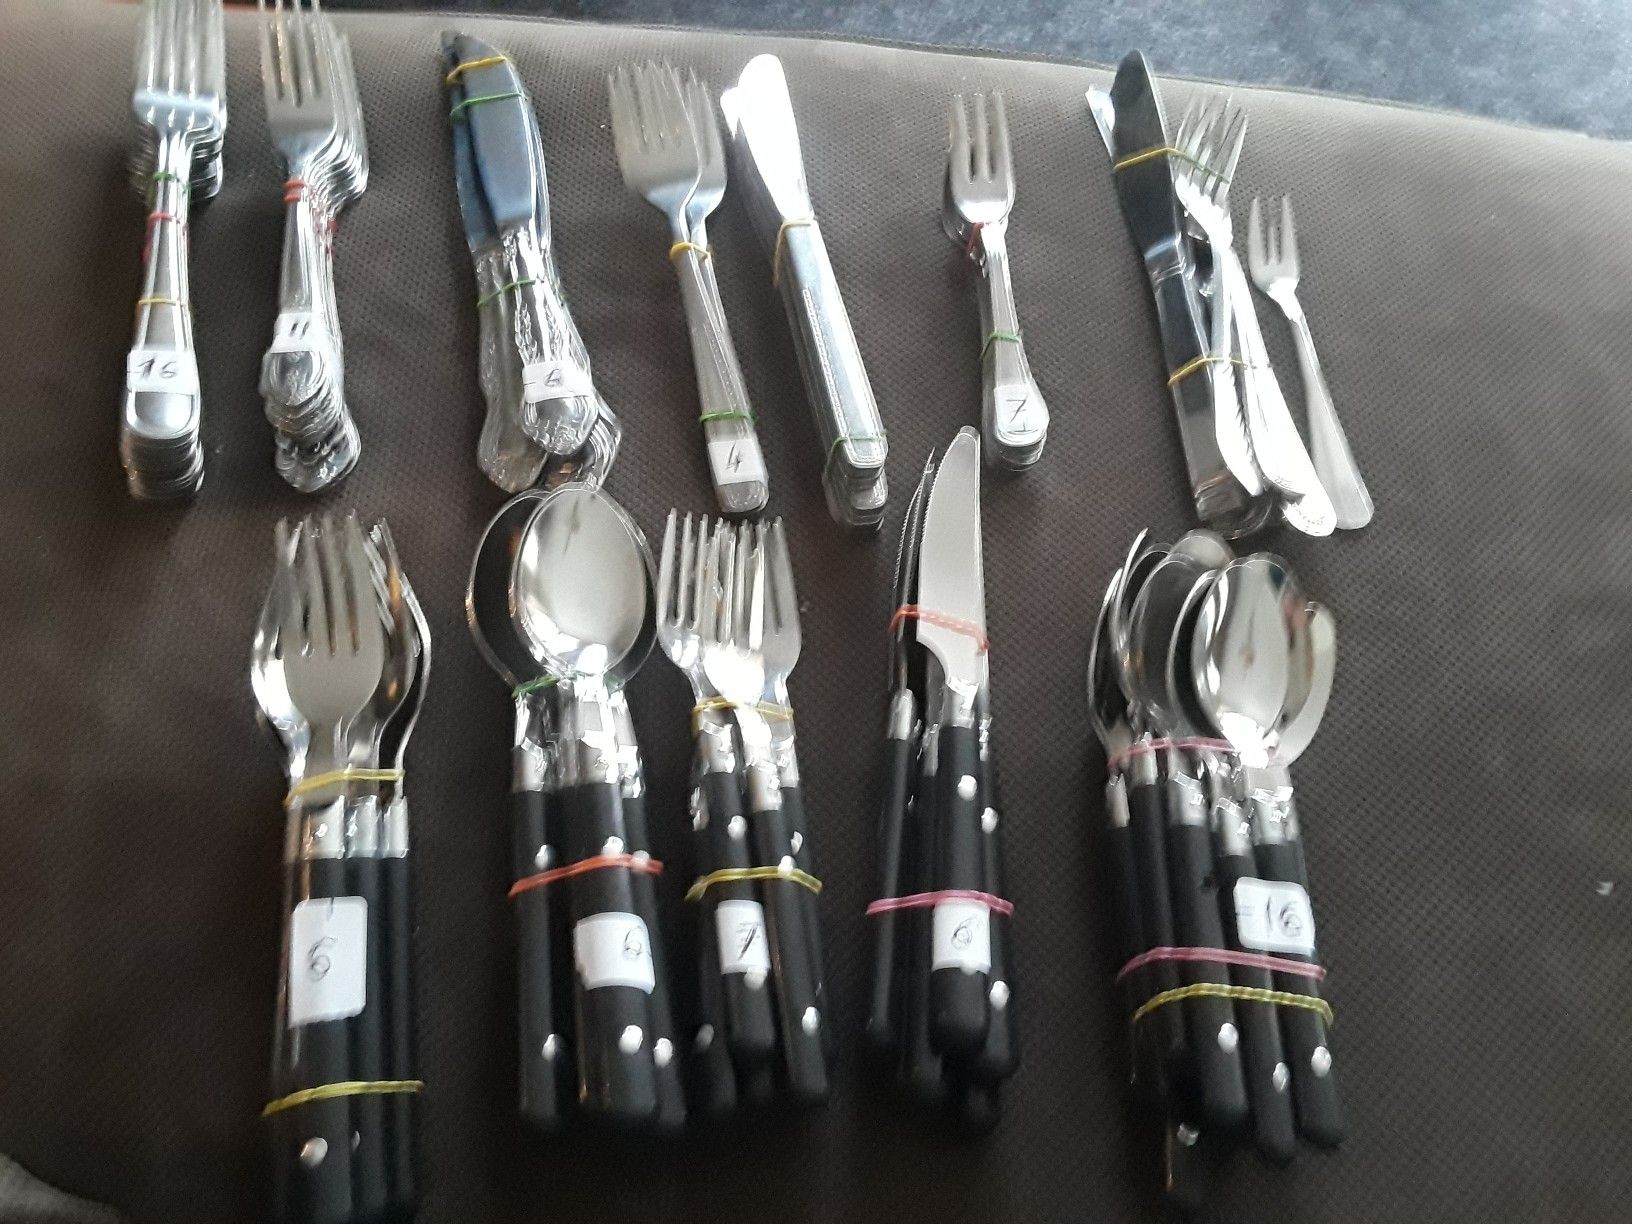 Forks.Spoons.Knives